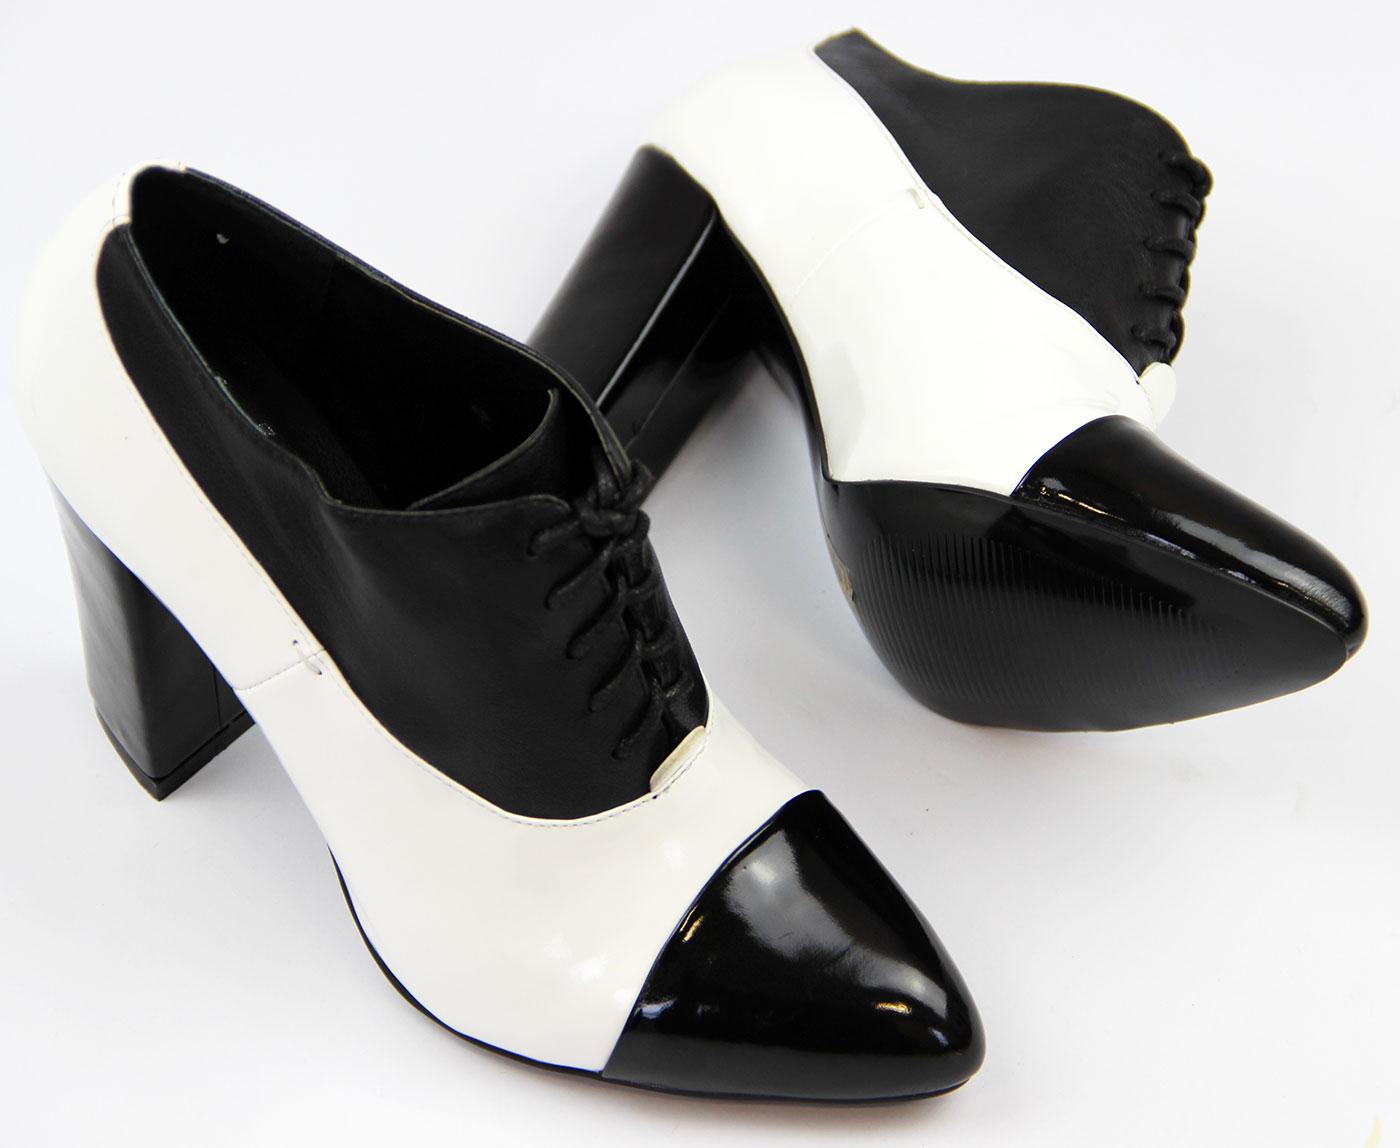 MADCAP ENGLAND Retro 60s Mod High Heel Shoe Boots Black/White